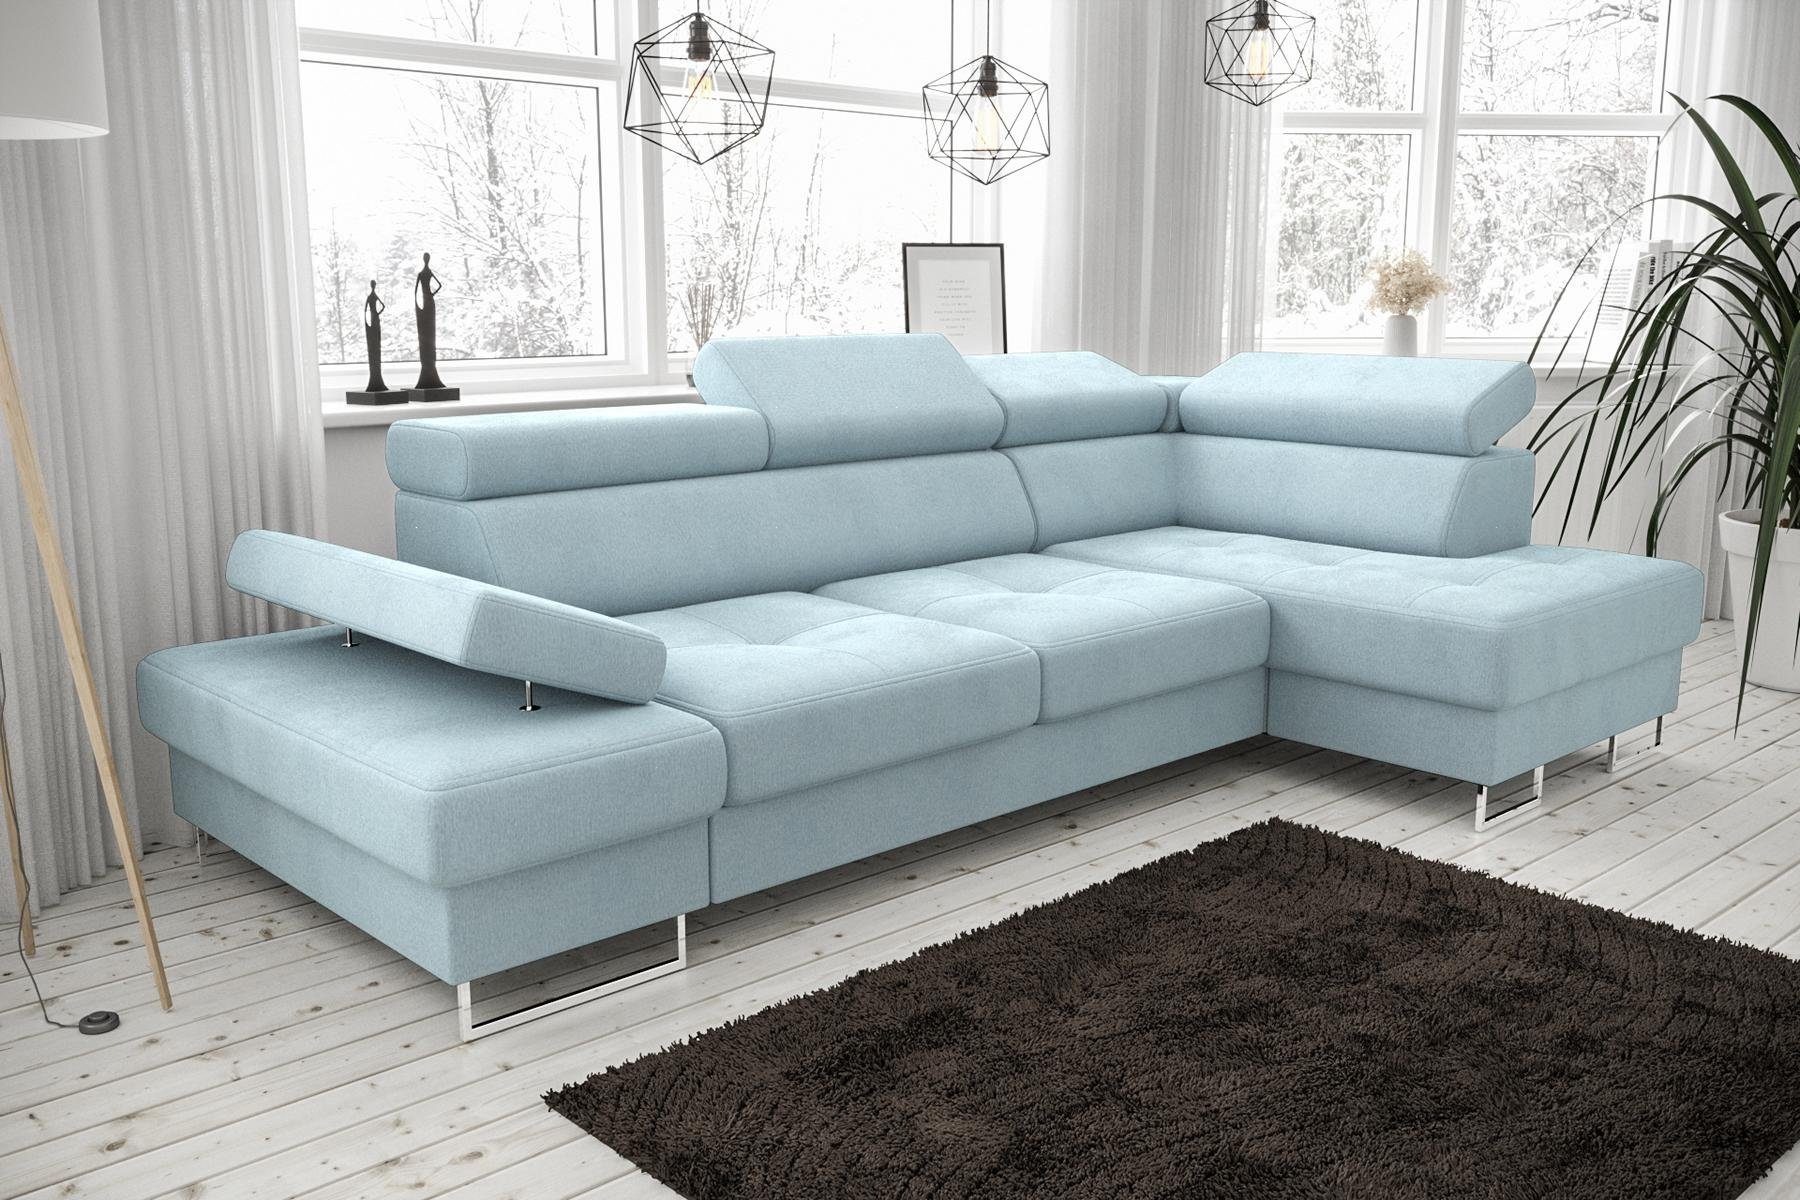 JVmoebel Ecksofa Sofas L Form Sofa Couch Polster Wohnlandschaft Design Ecksofa, Made in Europe Blau